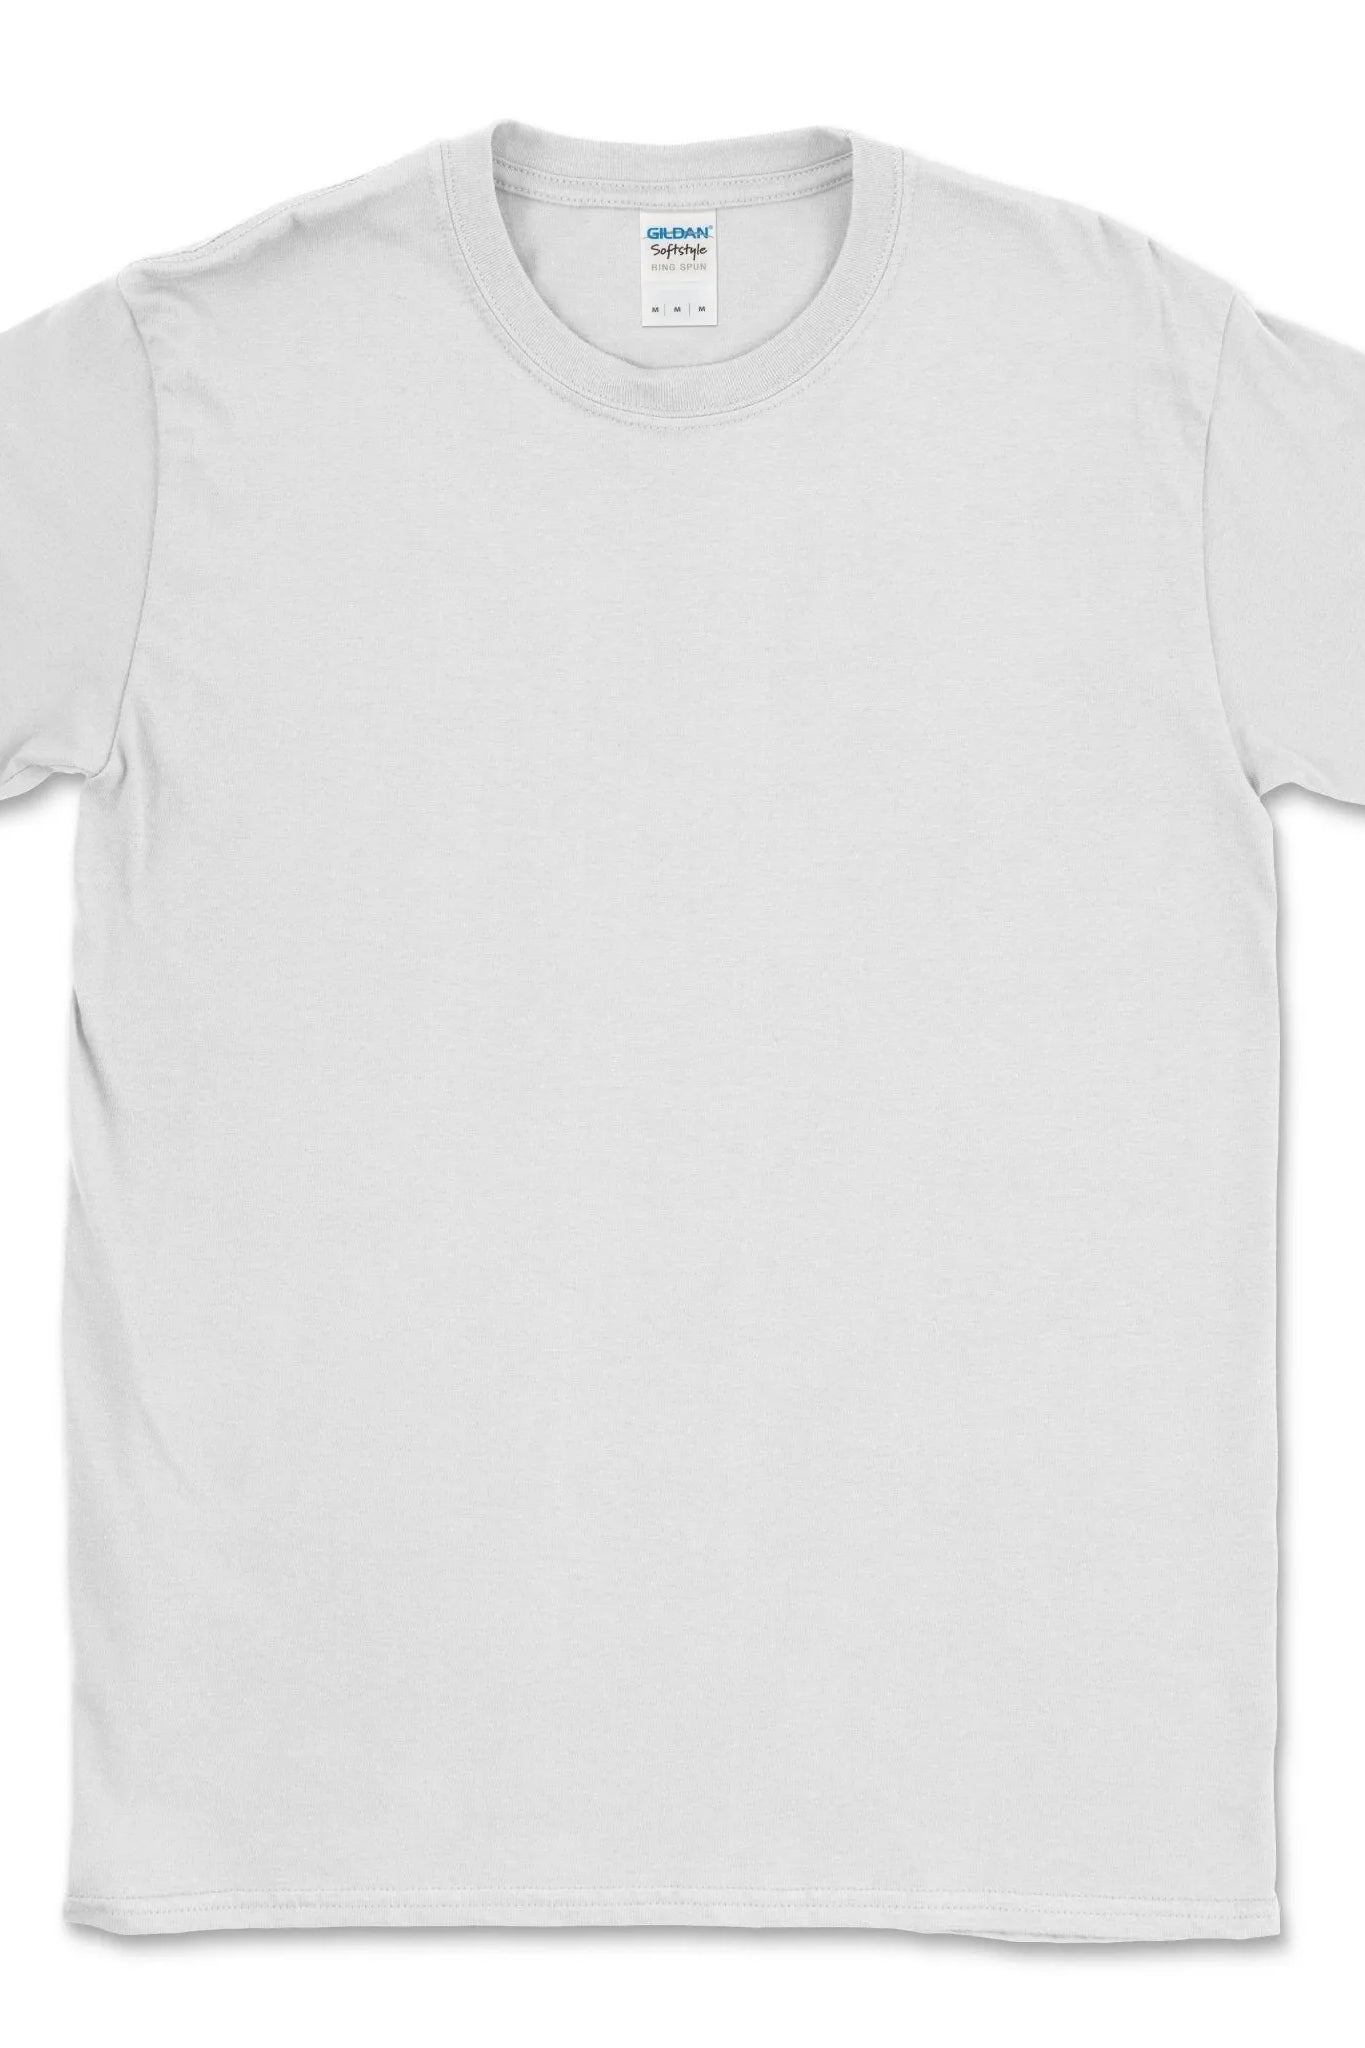 BYOG - Bring Your Own Garments - Print Me Shirts